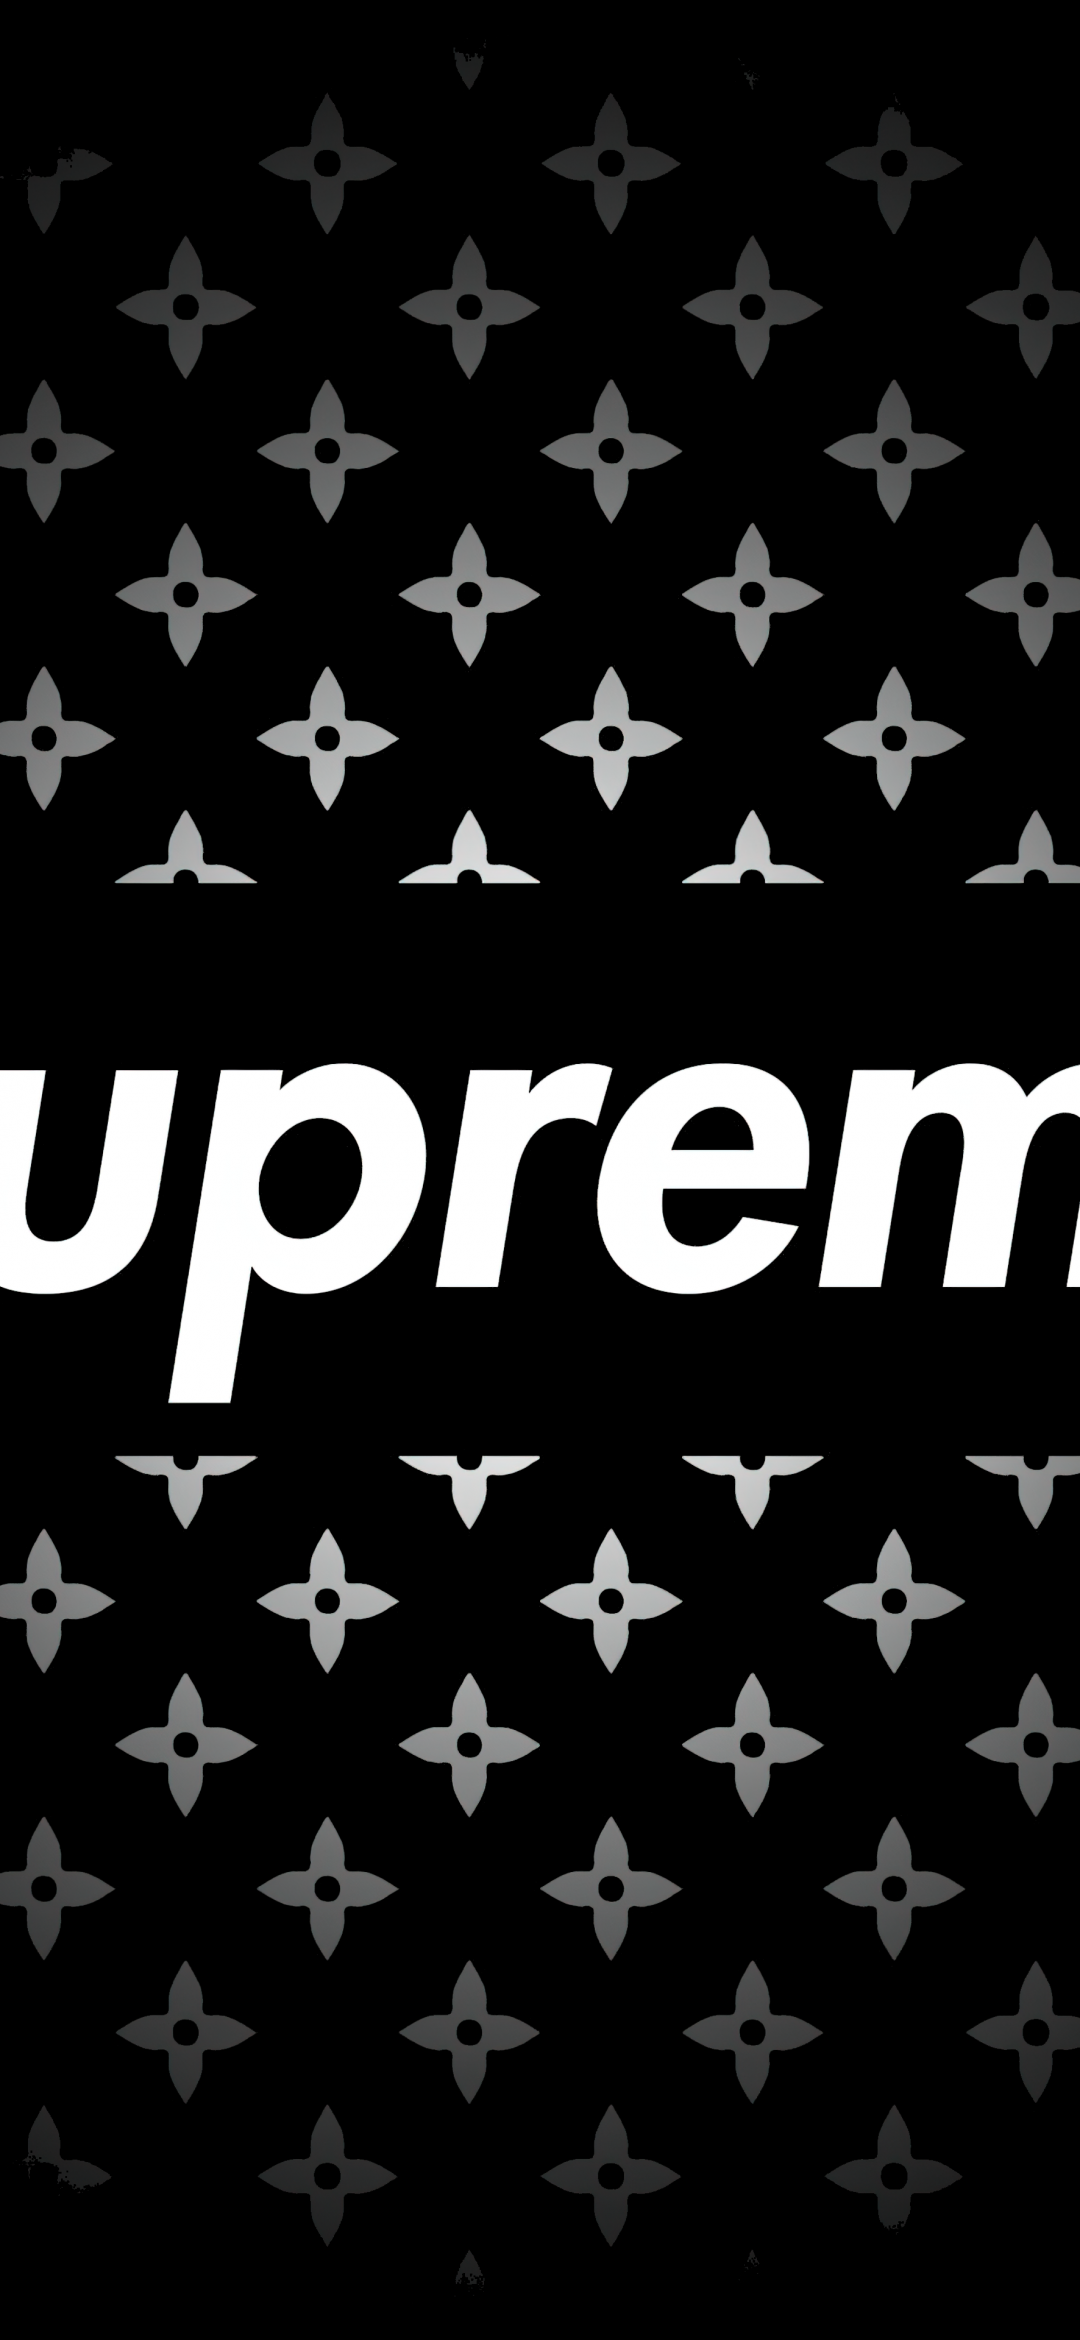 Supreme Wallpaper 4K, Logo, Black background